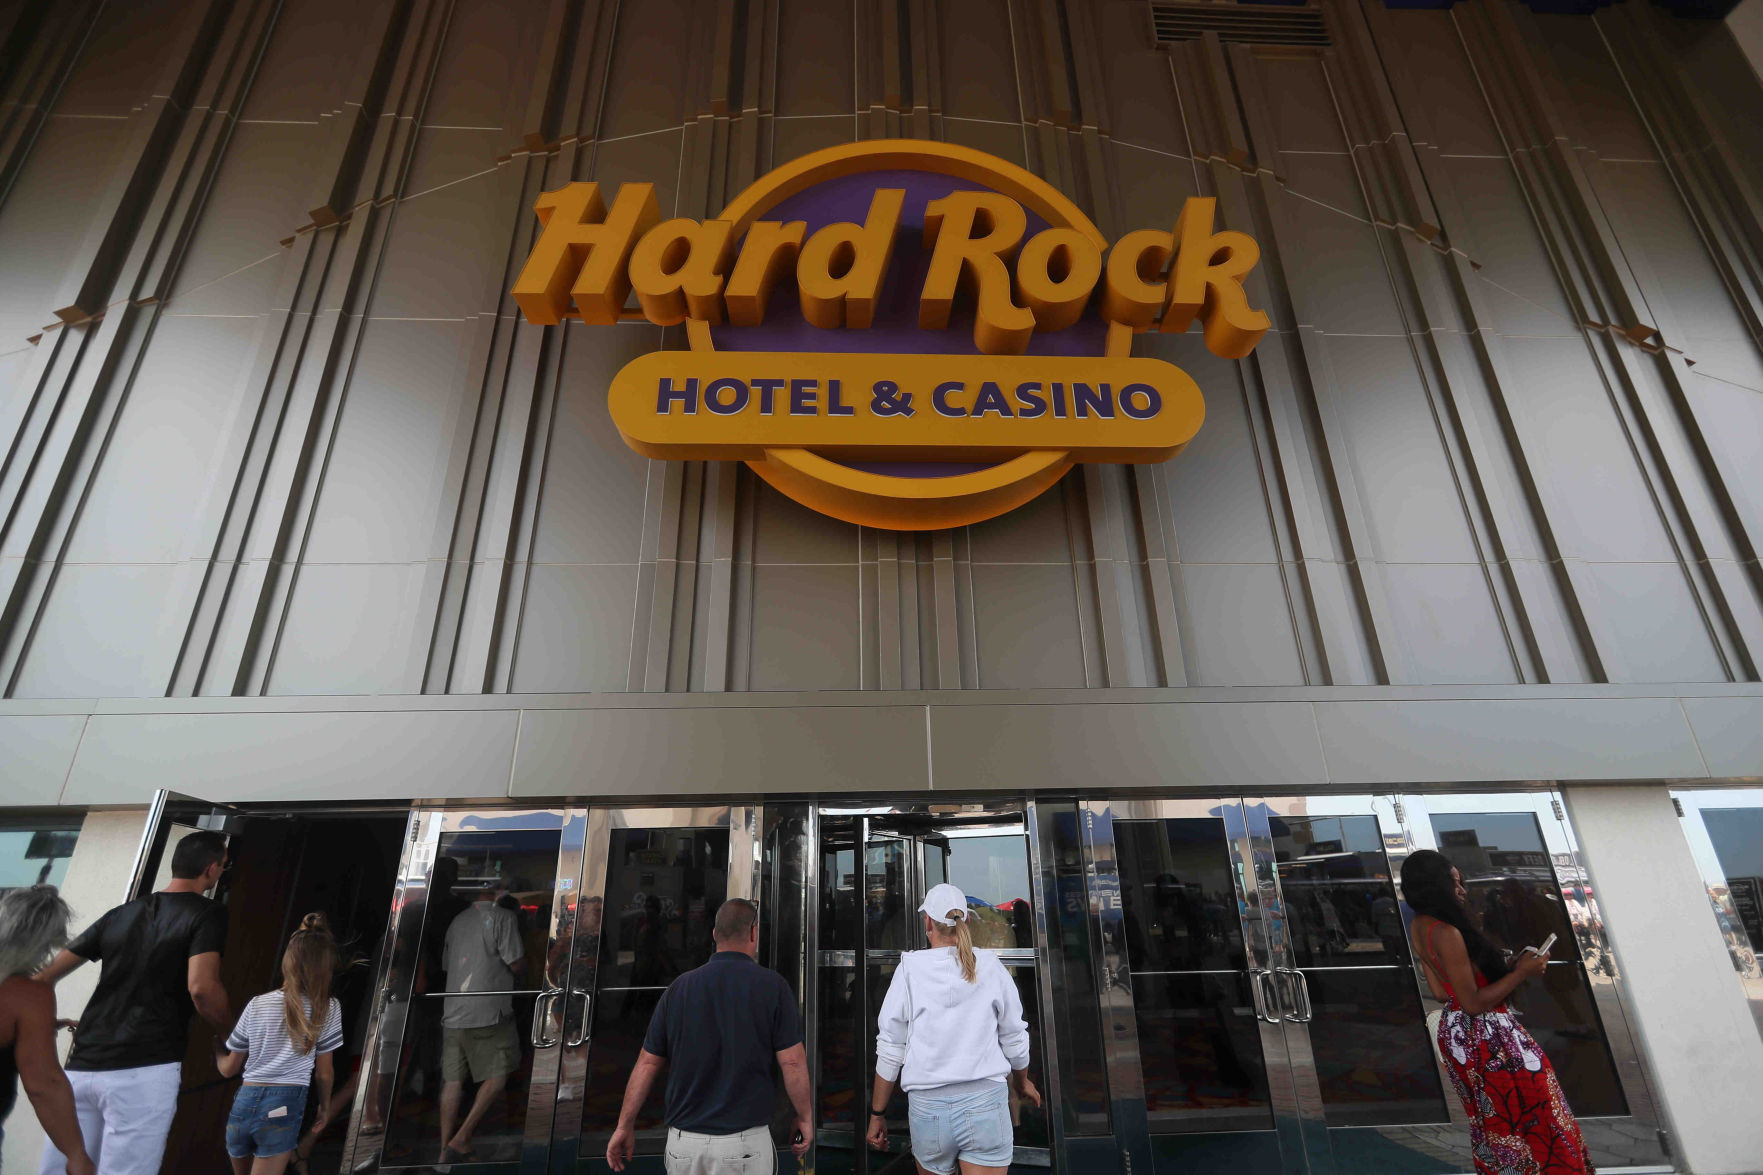 event hard rock casino november 10